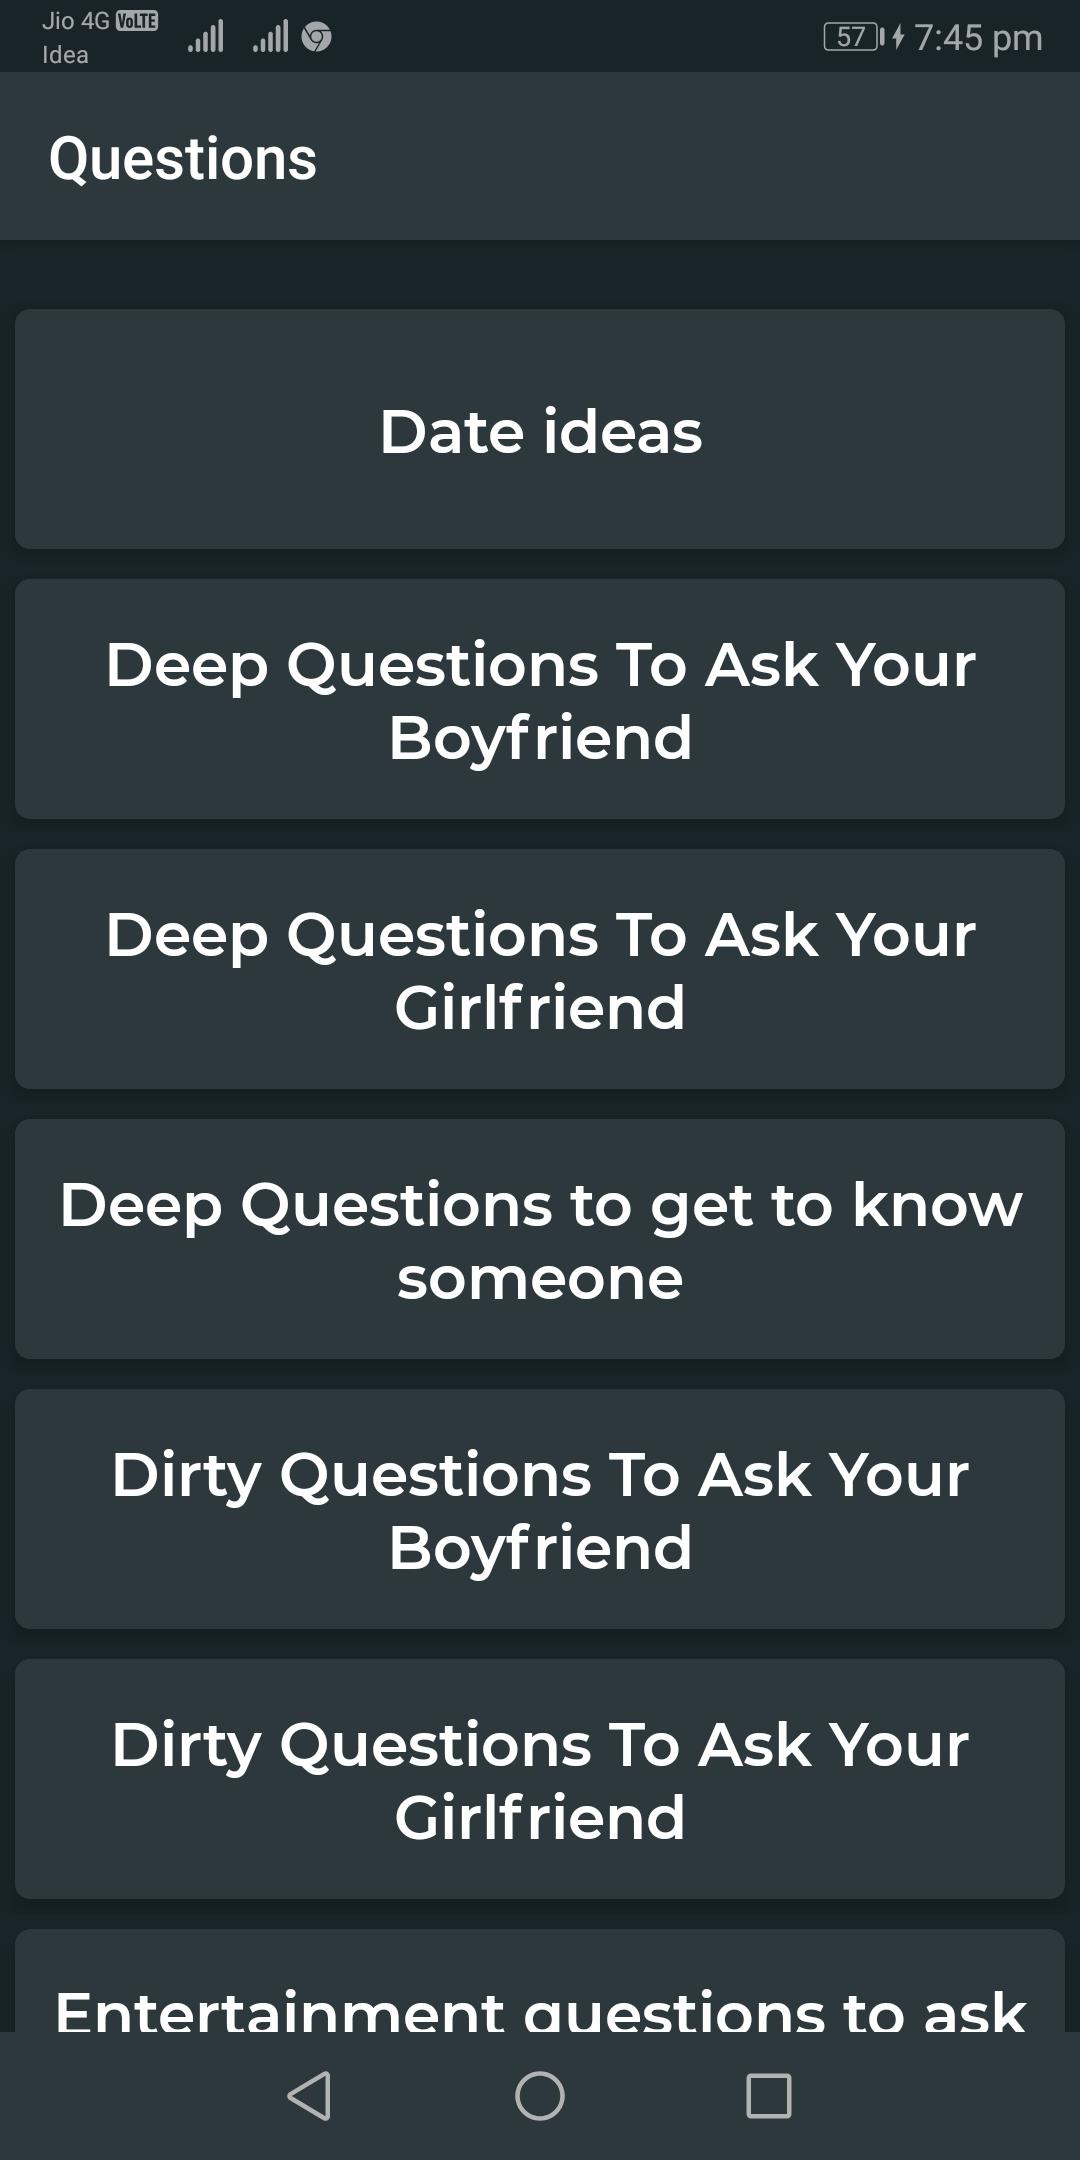 Questions to ask your Girlfriend/Boyfriend (Flirt) 2